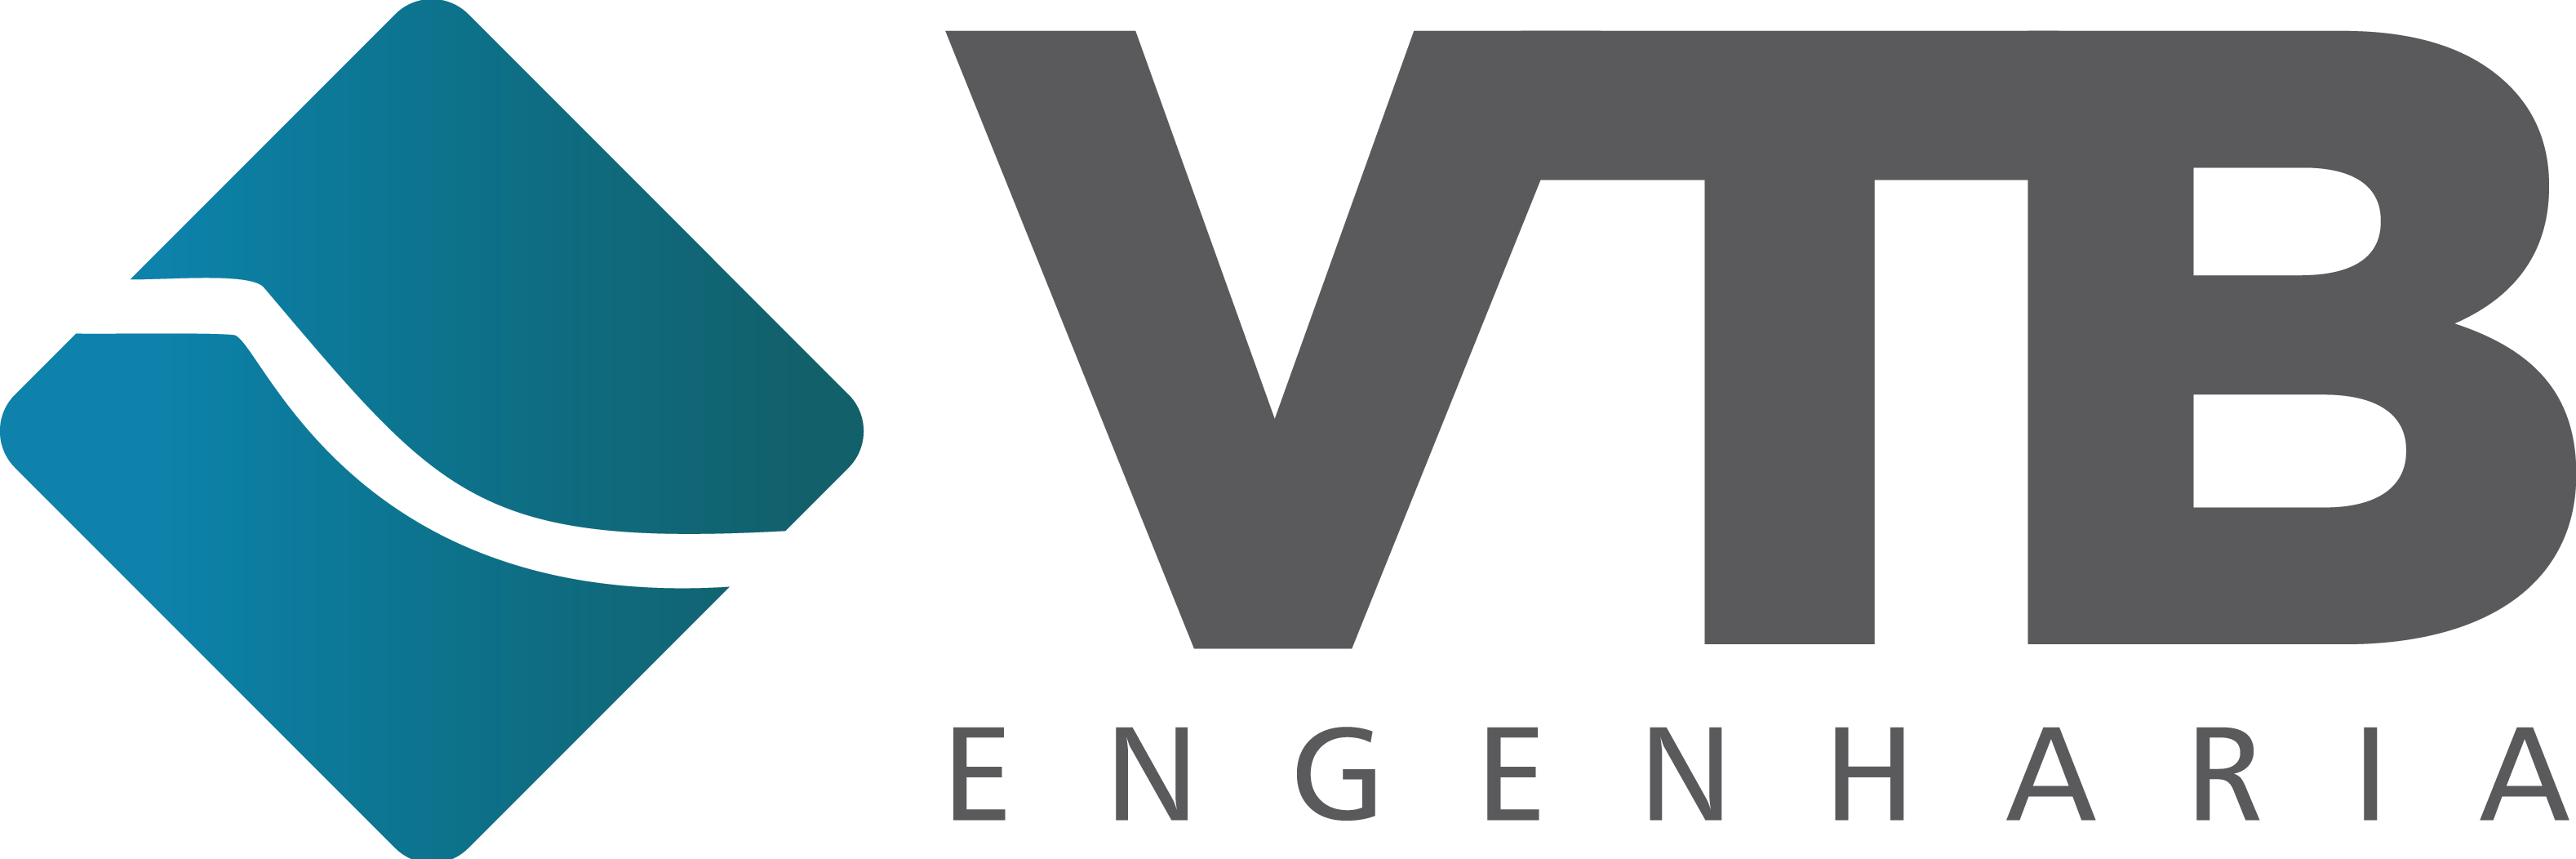 VTB Engenharia